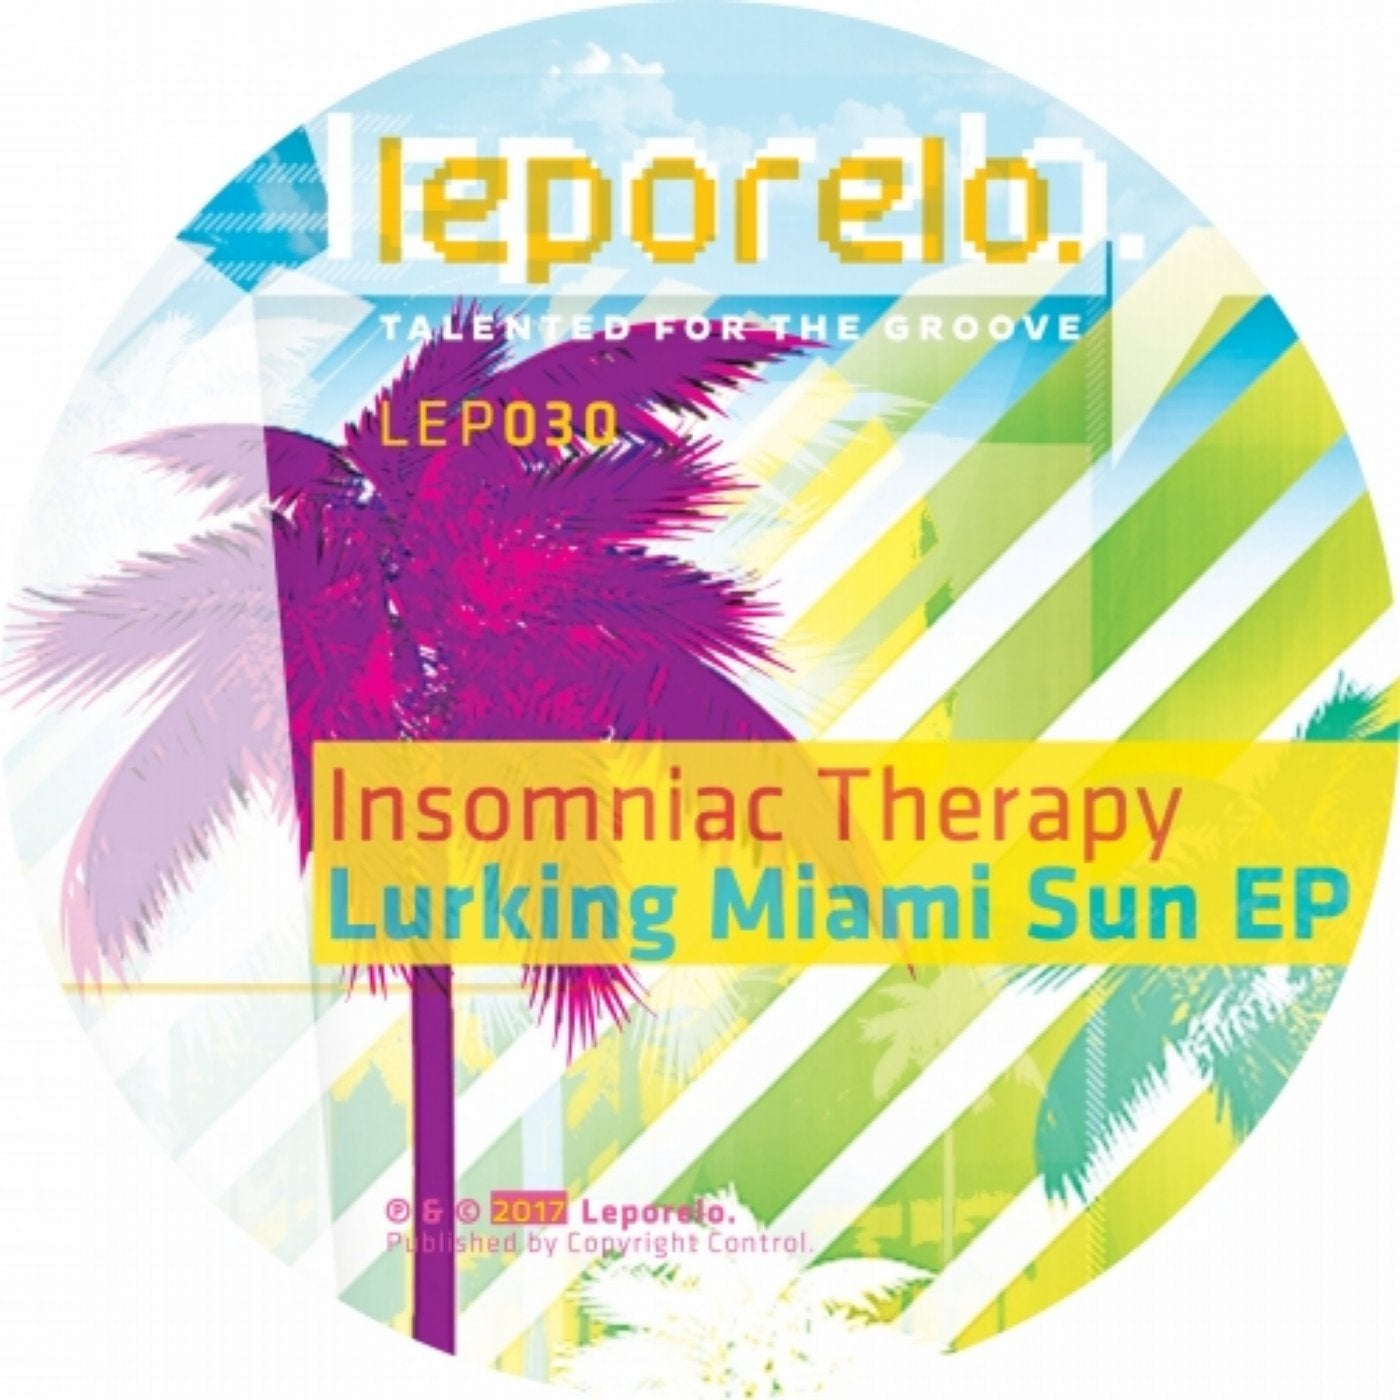 Lurking Miami Sun EP